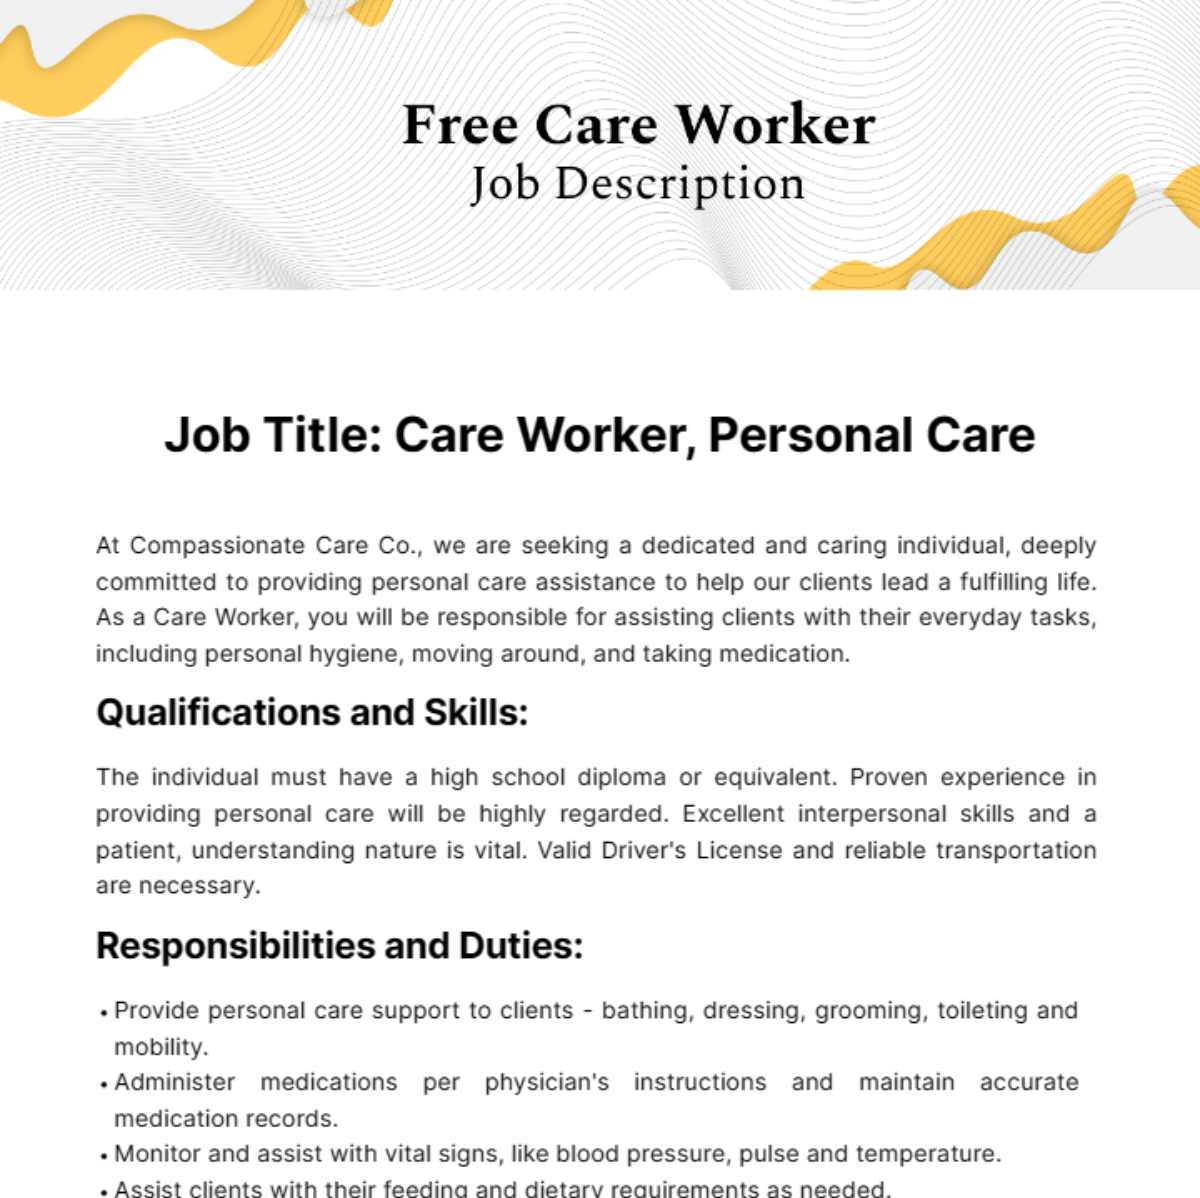 Free Care Worker Job Description Template